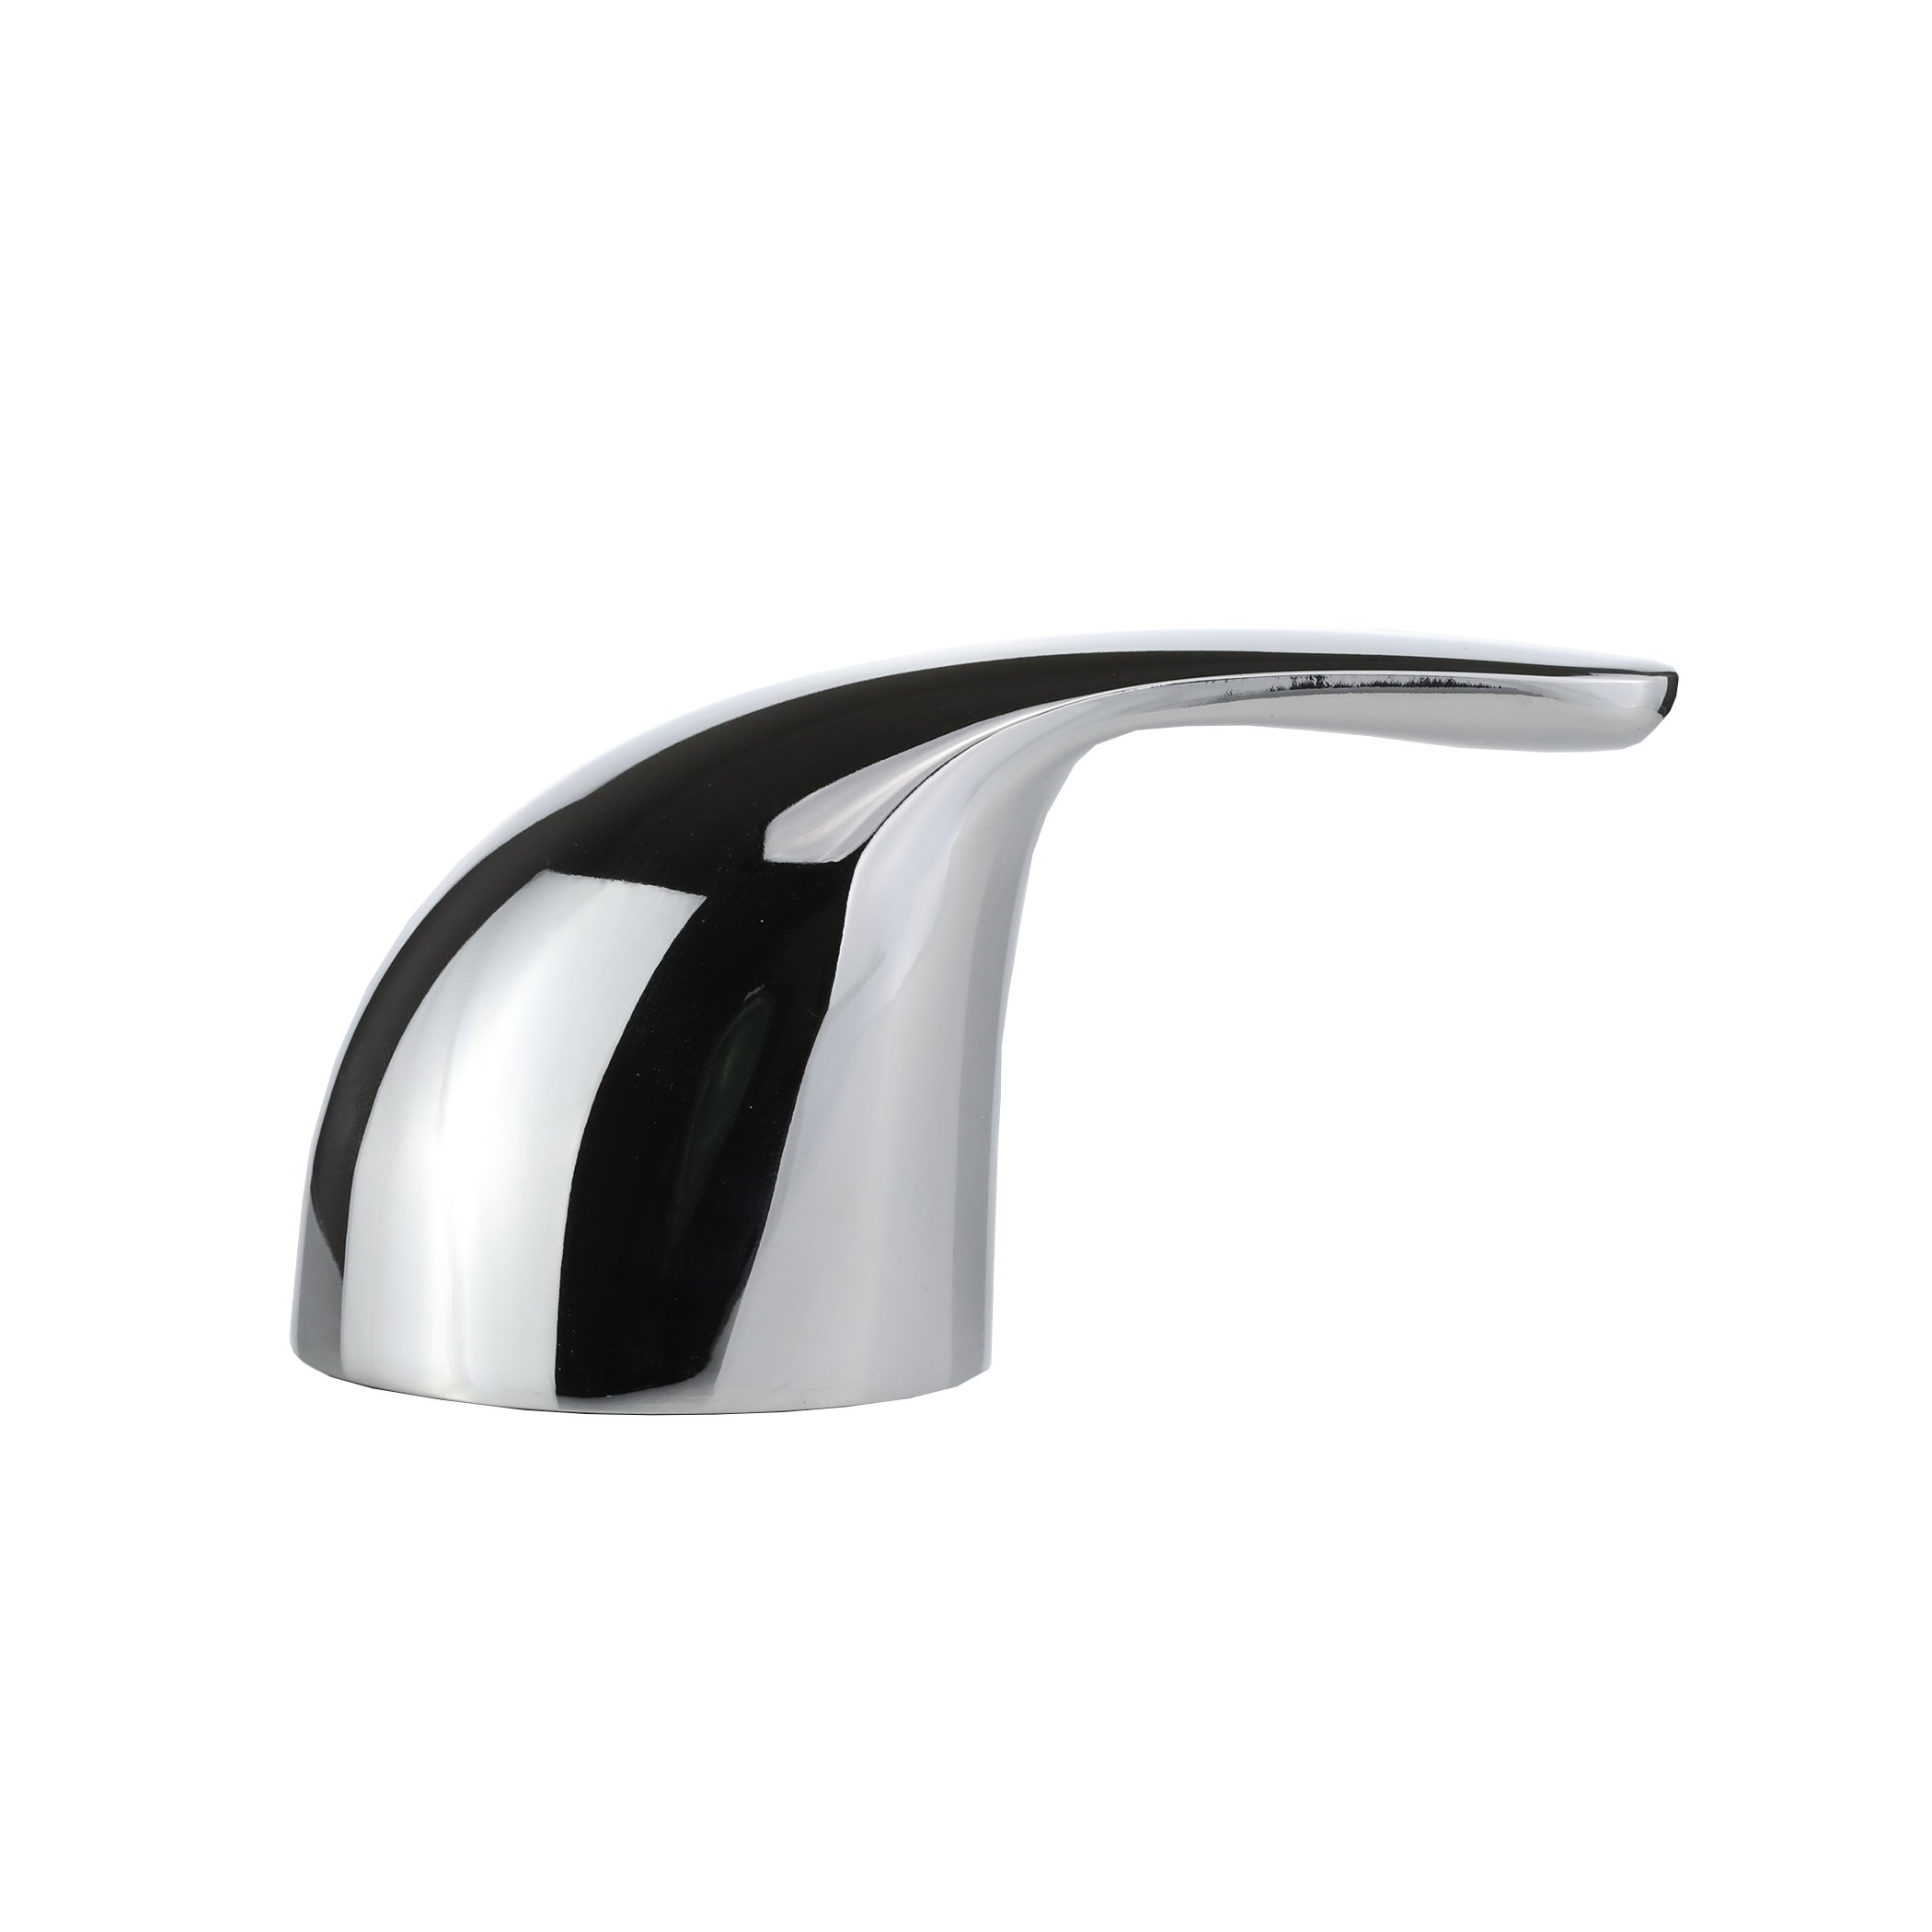 Details about   Danco 88170 Replacement for Phoenix Sink & Tub/Shower Handles 1-3/4" Ch x 